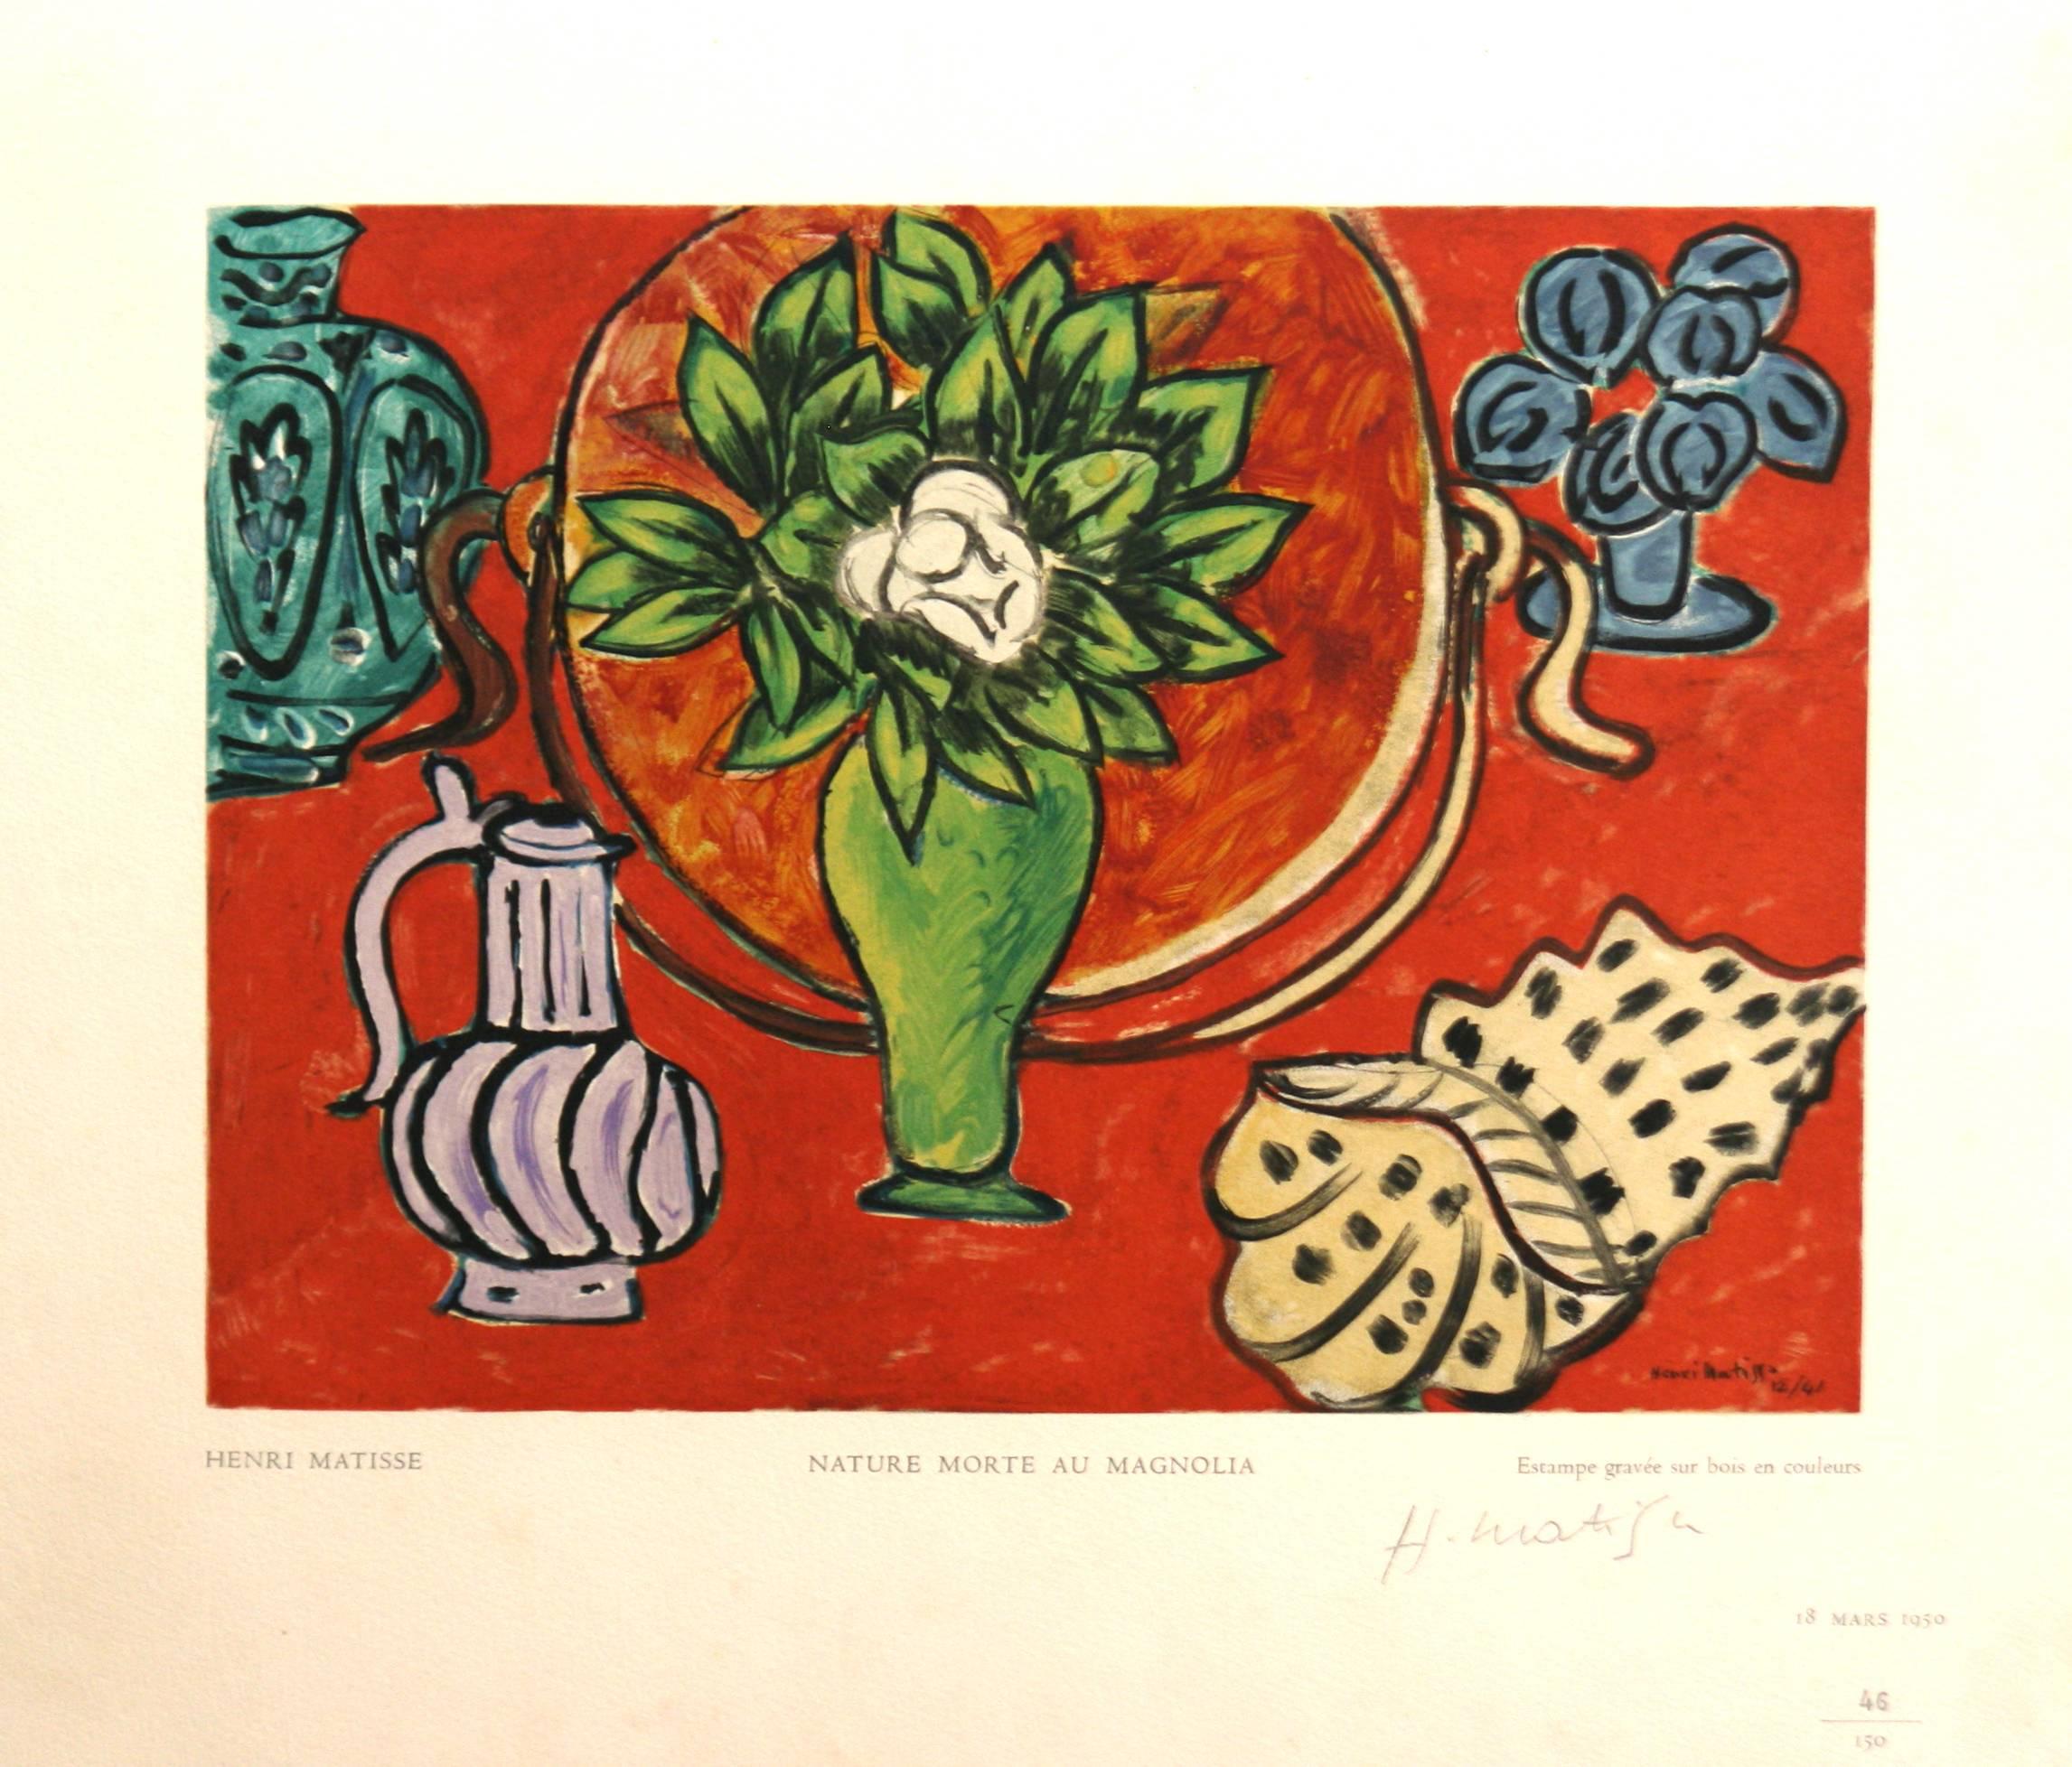 (after) Henri Matisse Still-Life Print - Nature Morte au Magnolia Henri Matisse wood engraving Estampe Robert Rey, 1950